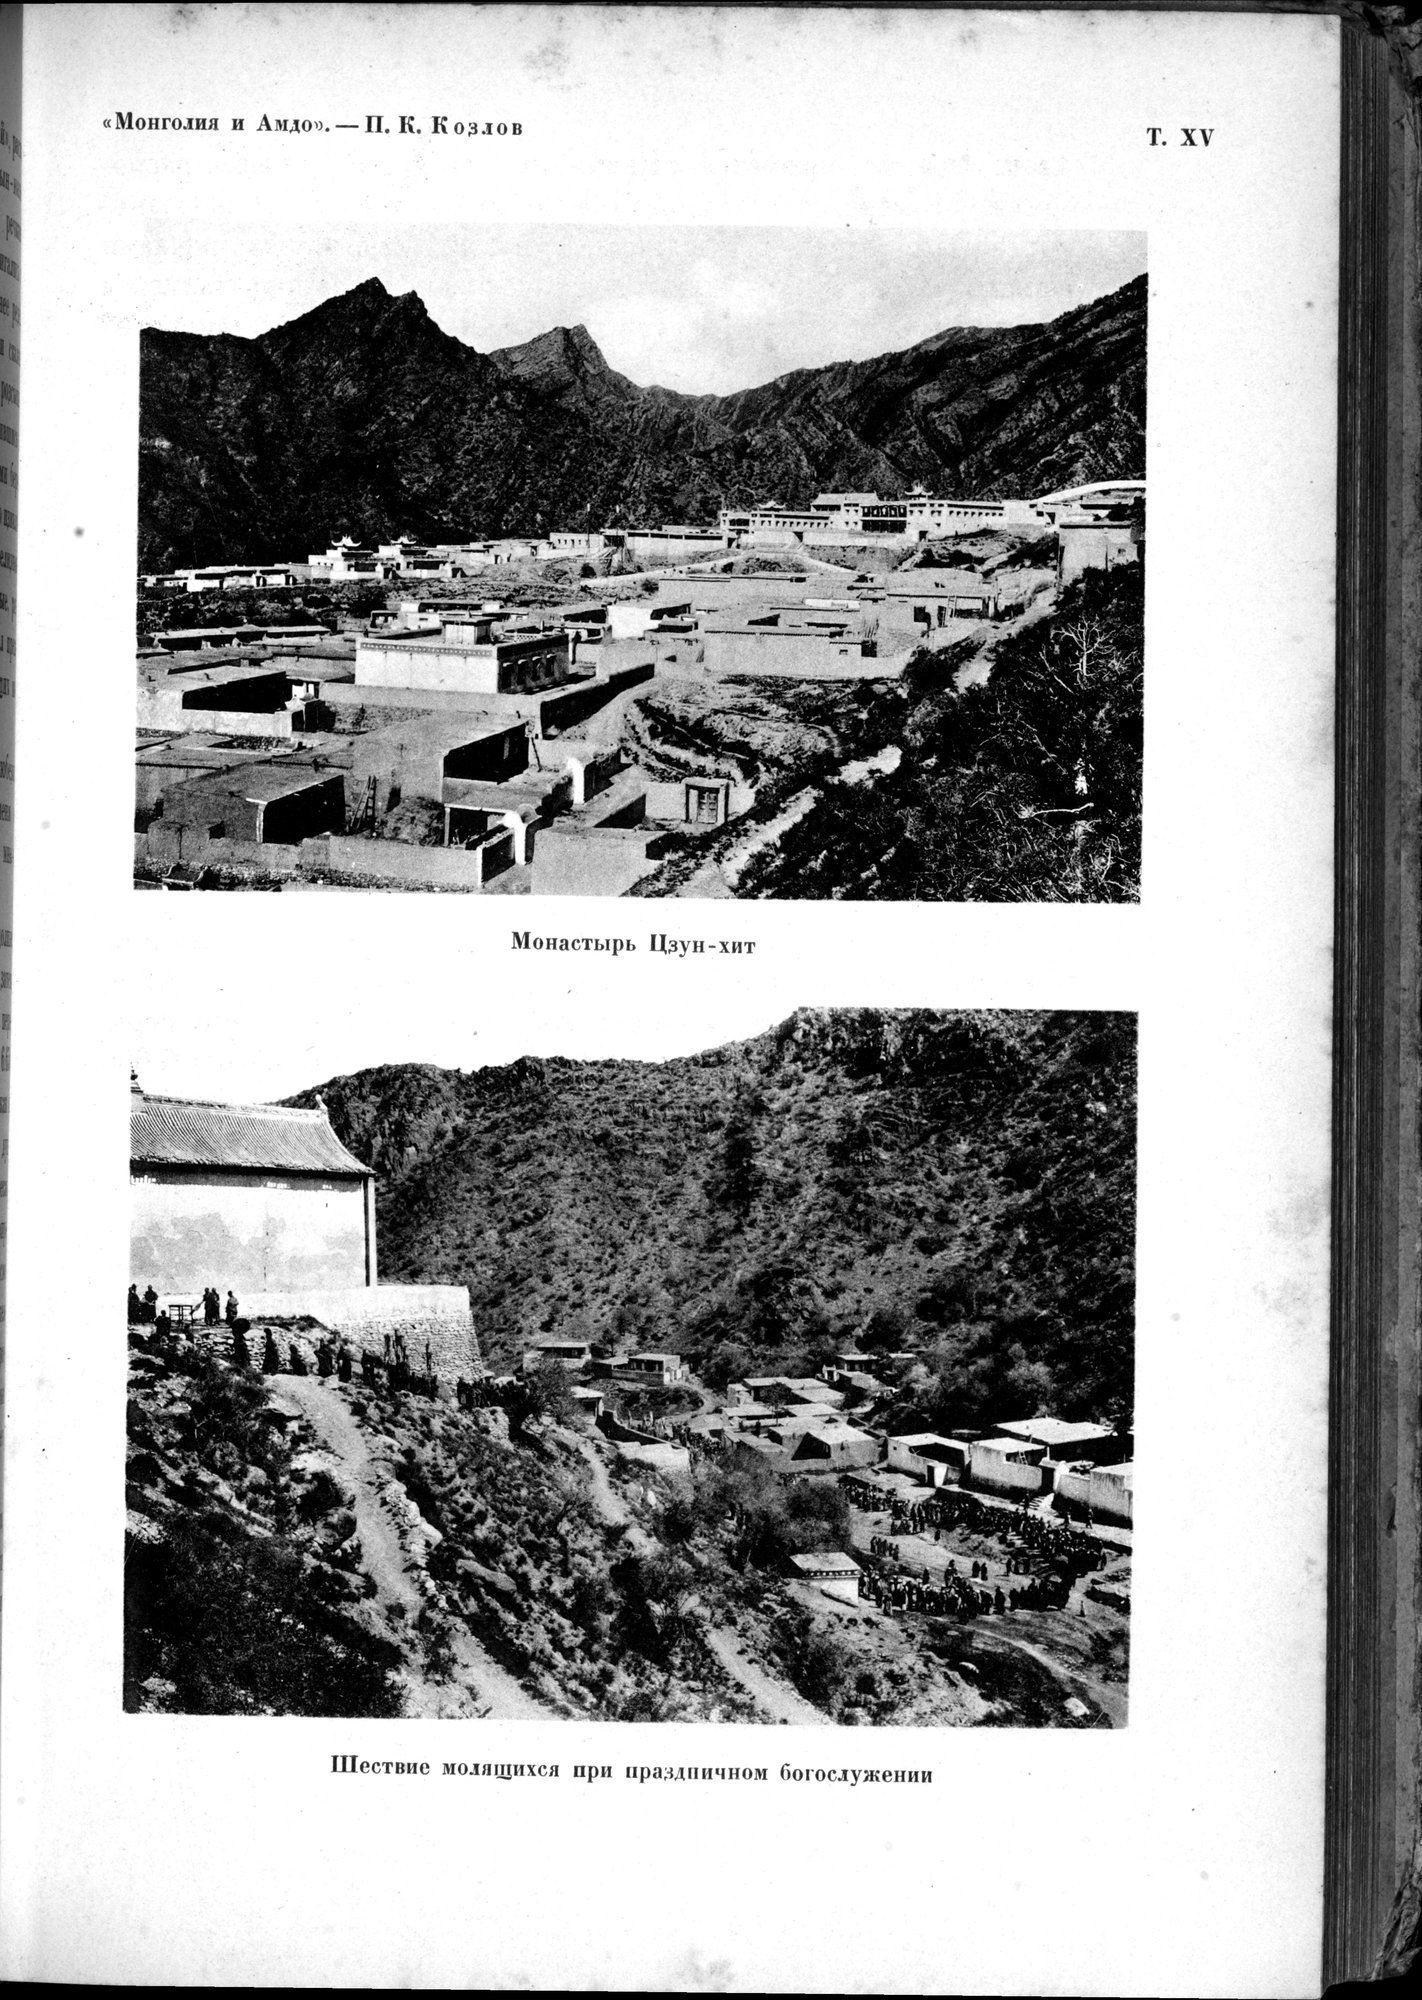 Mongoliya i Amdo i mertby gorod Khara-Khoto : vol.1 / Page 255 (Grayscale High Resolution Image)